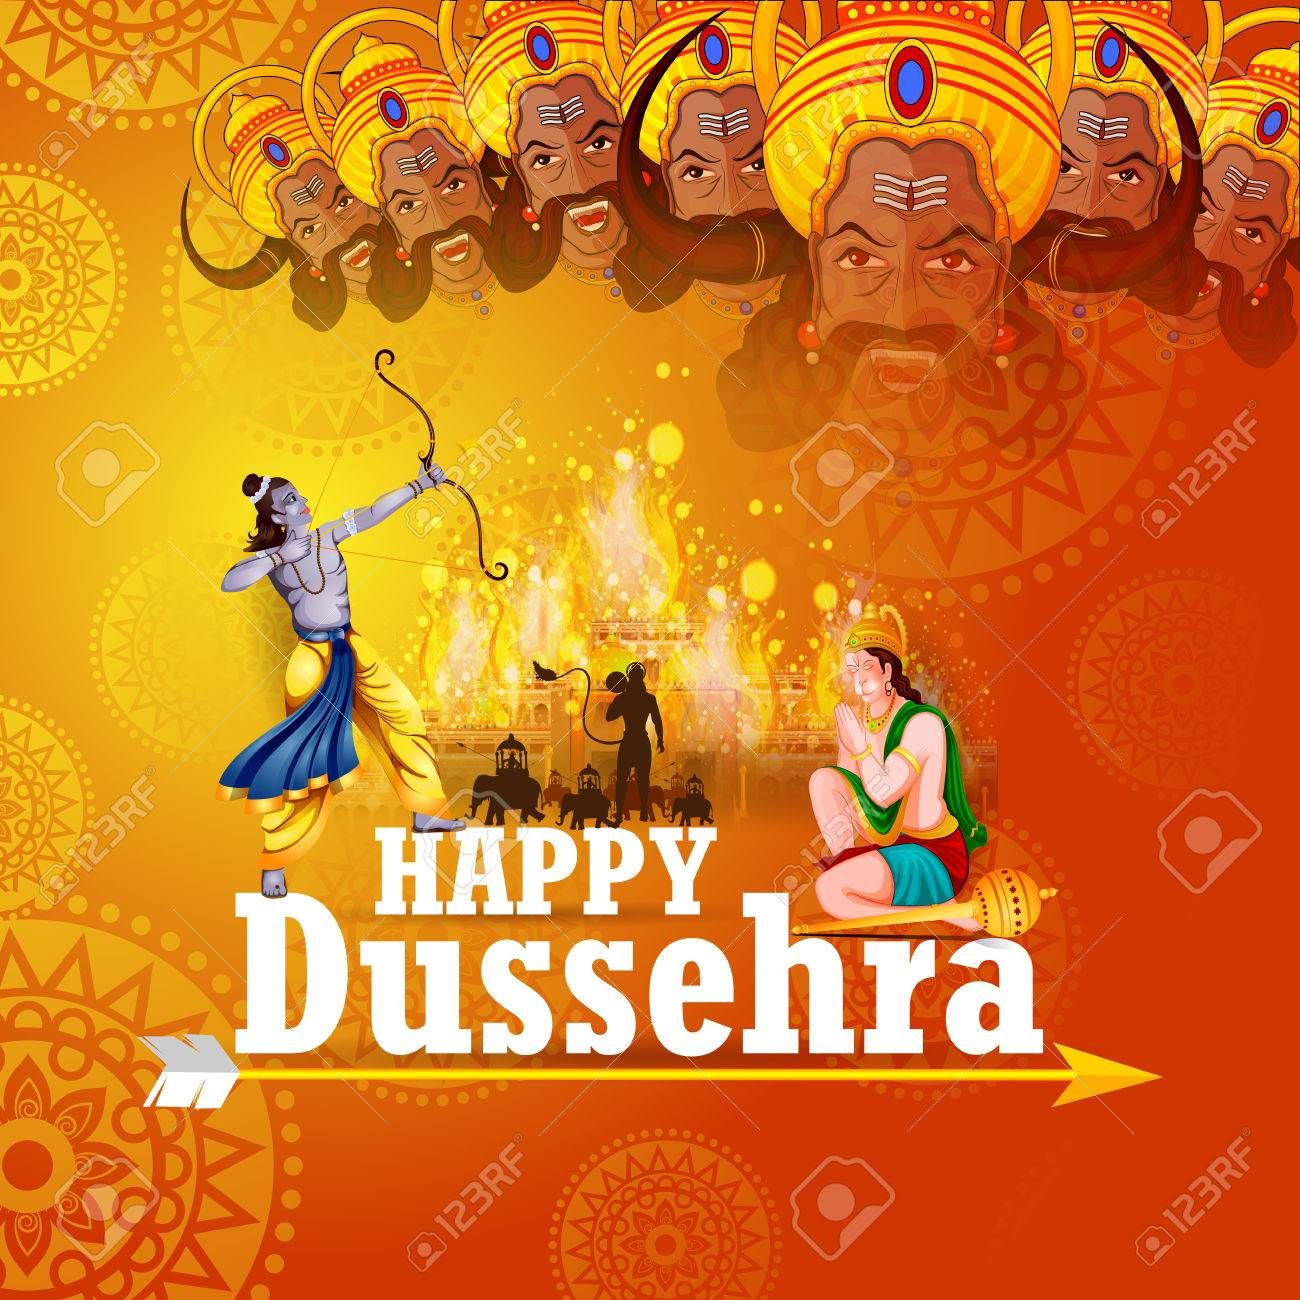 Happy Dussehra 2019 Image